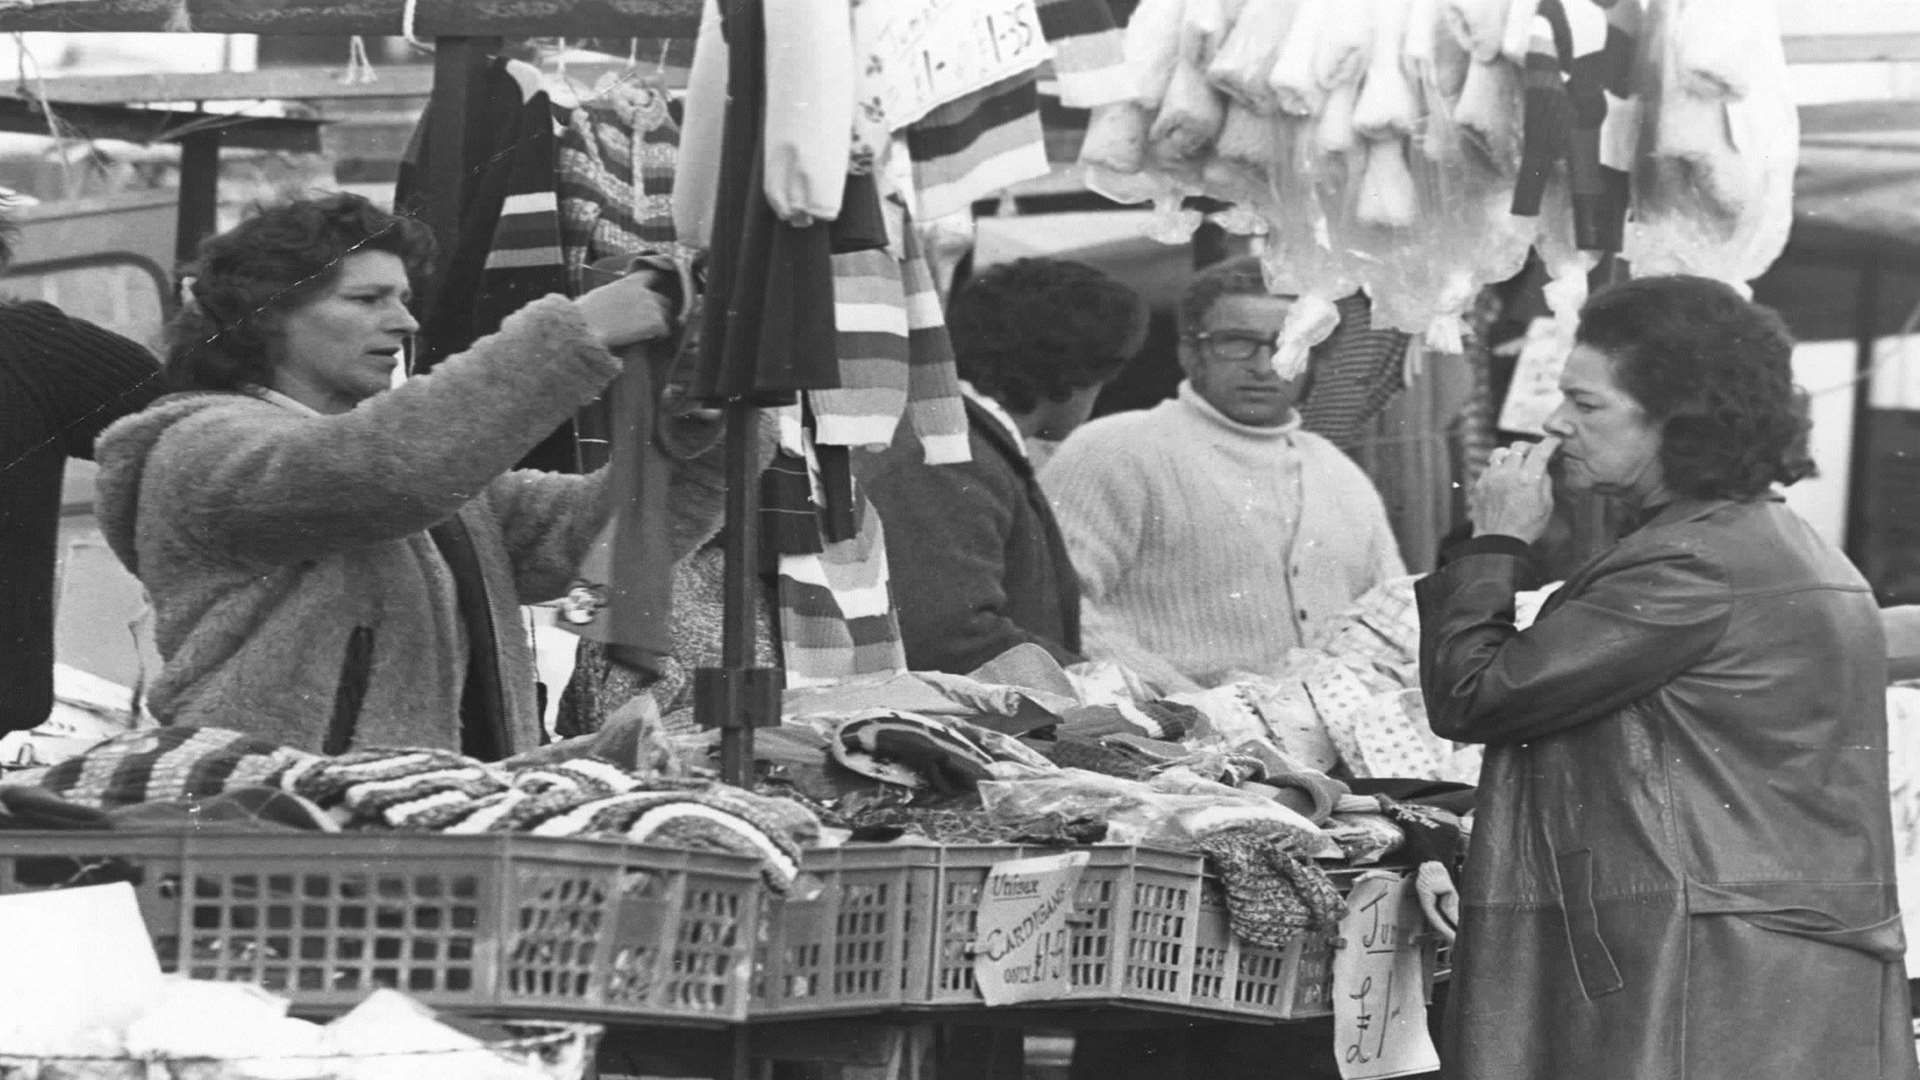 Folkestone Market in October 1974